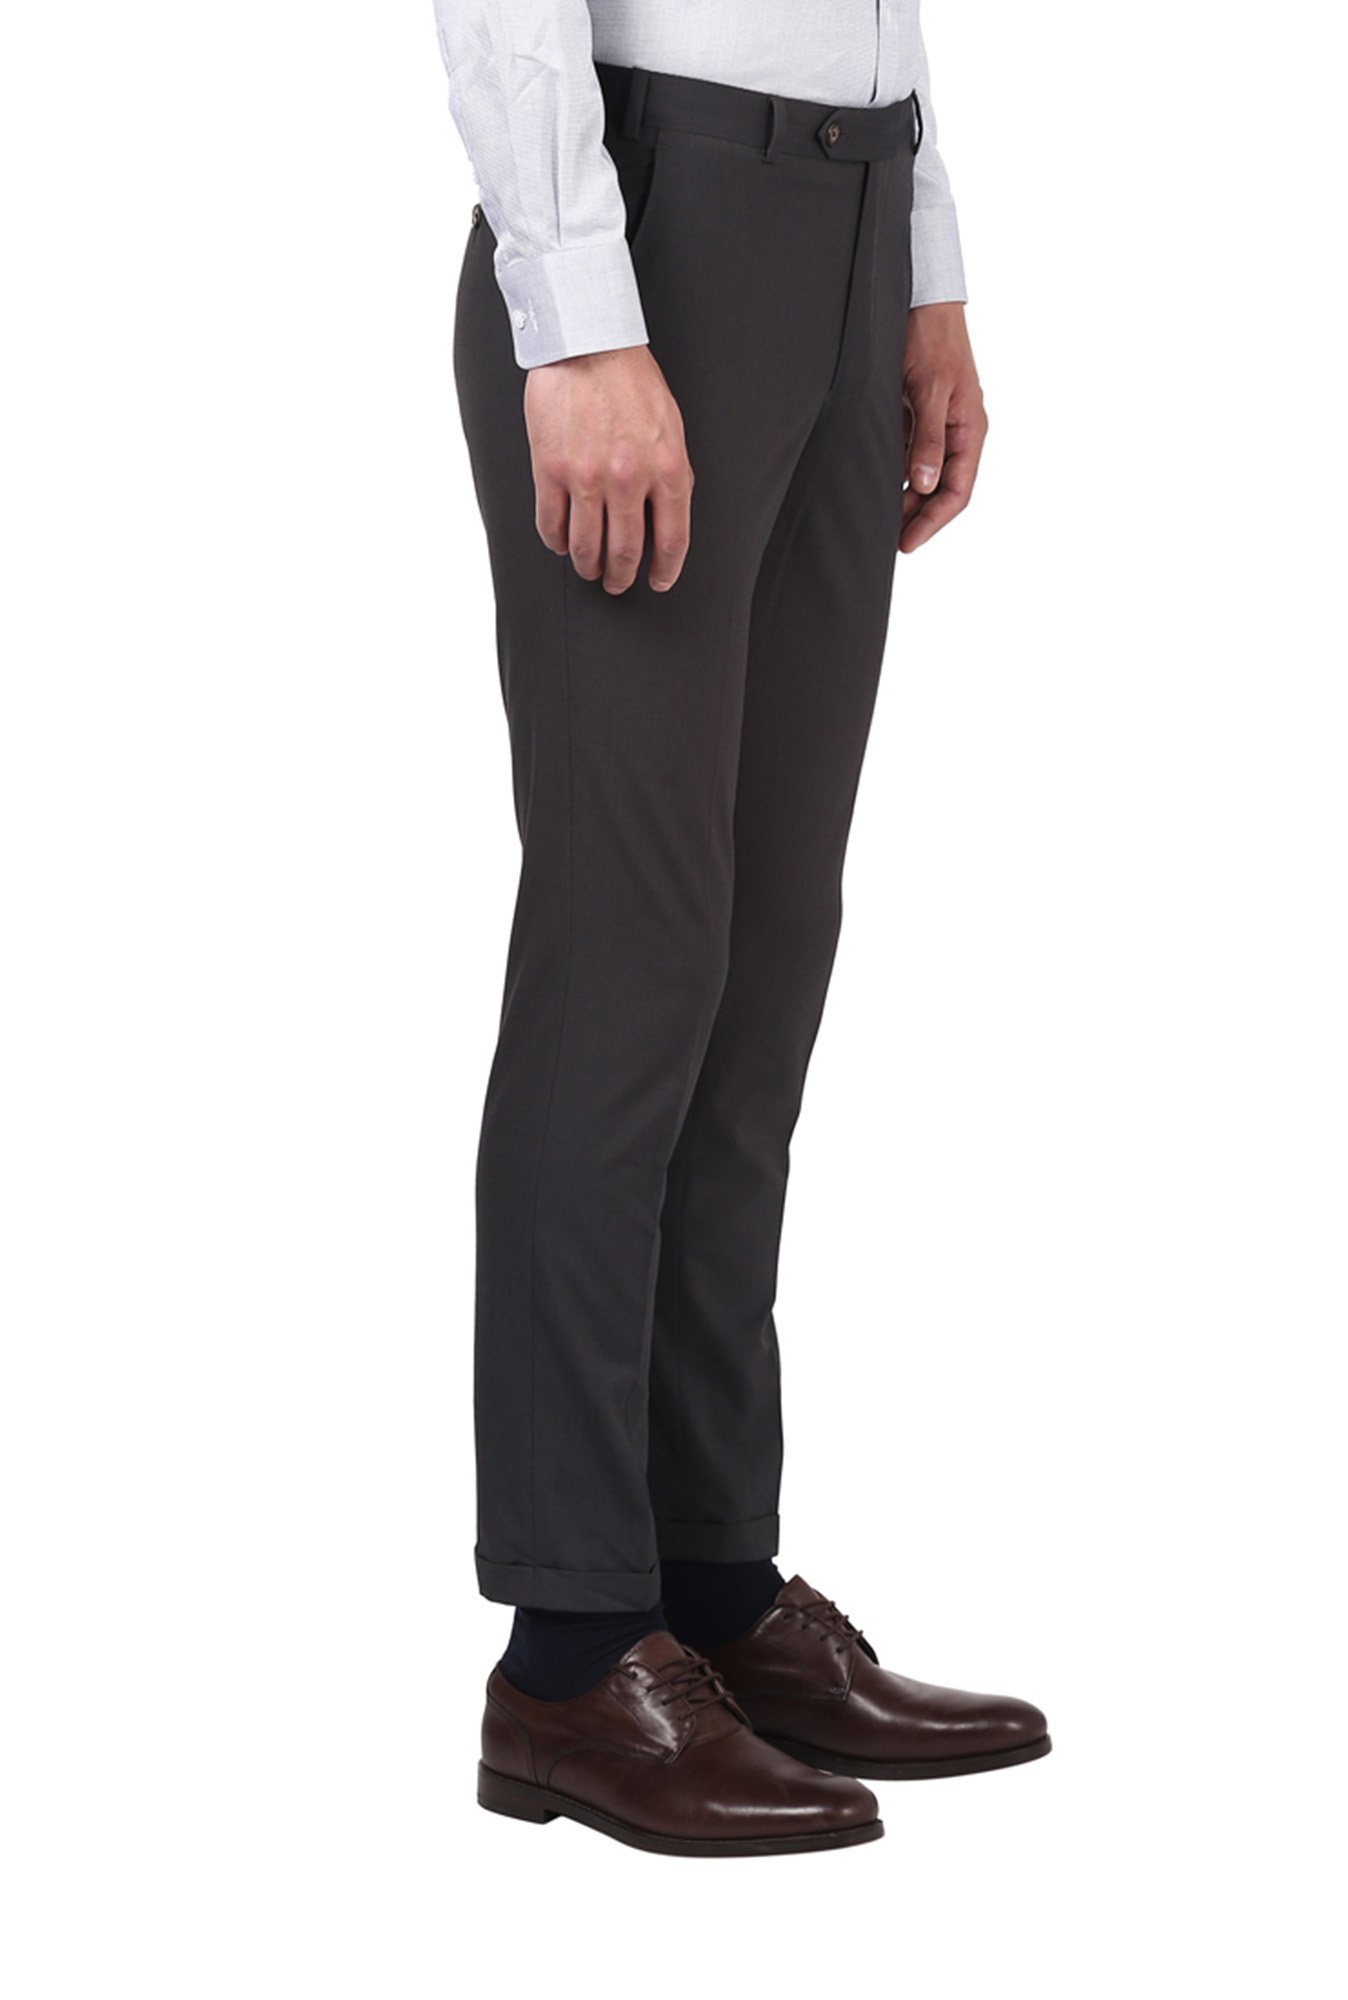 PARK AVENUE Slim Fit Men Grey Trousers  Buy PARK AVENUE Slim Fit Men Grey  Trousers Online at Best Prices in India  Flipkartcom  VIBRANT CONTEST